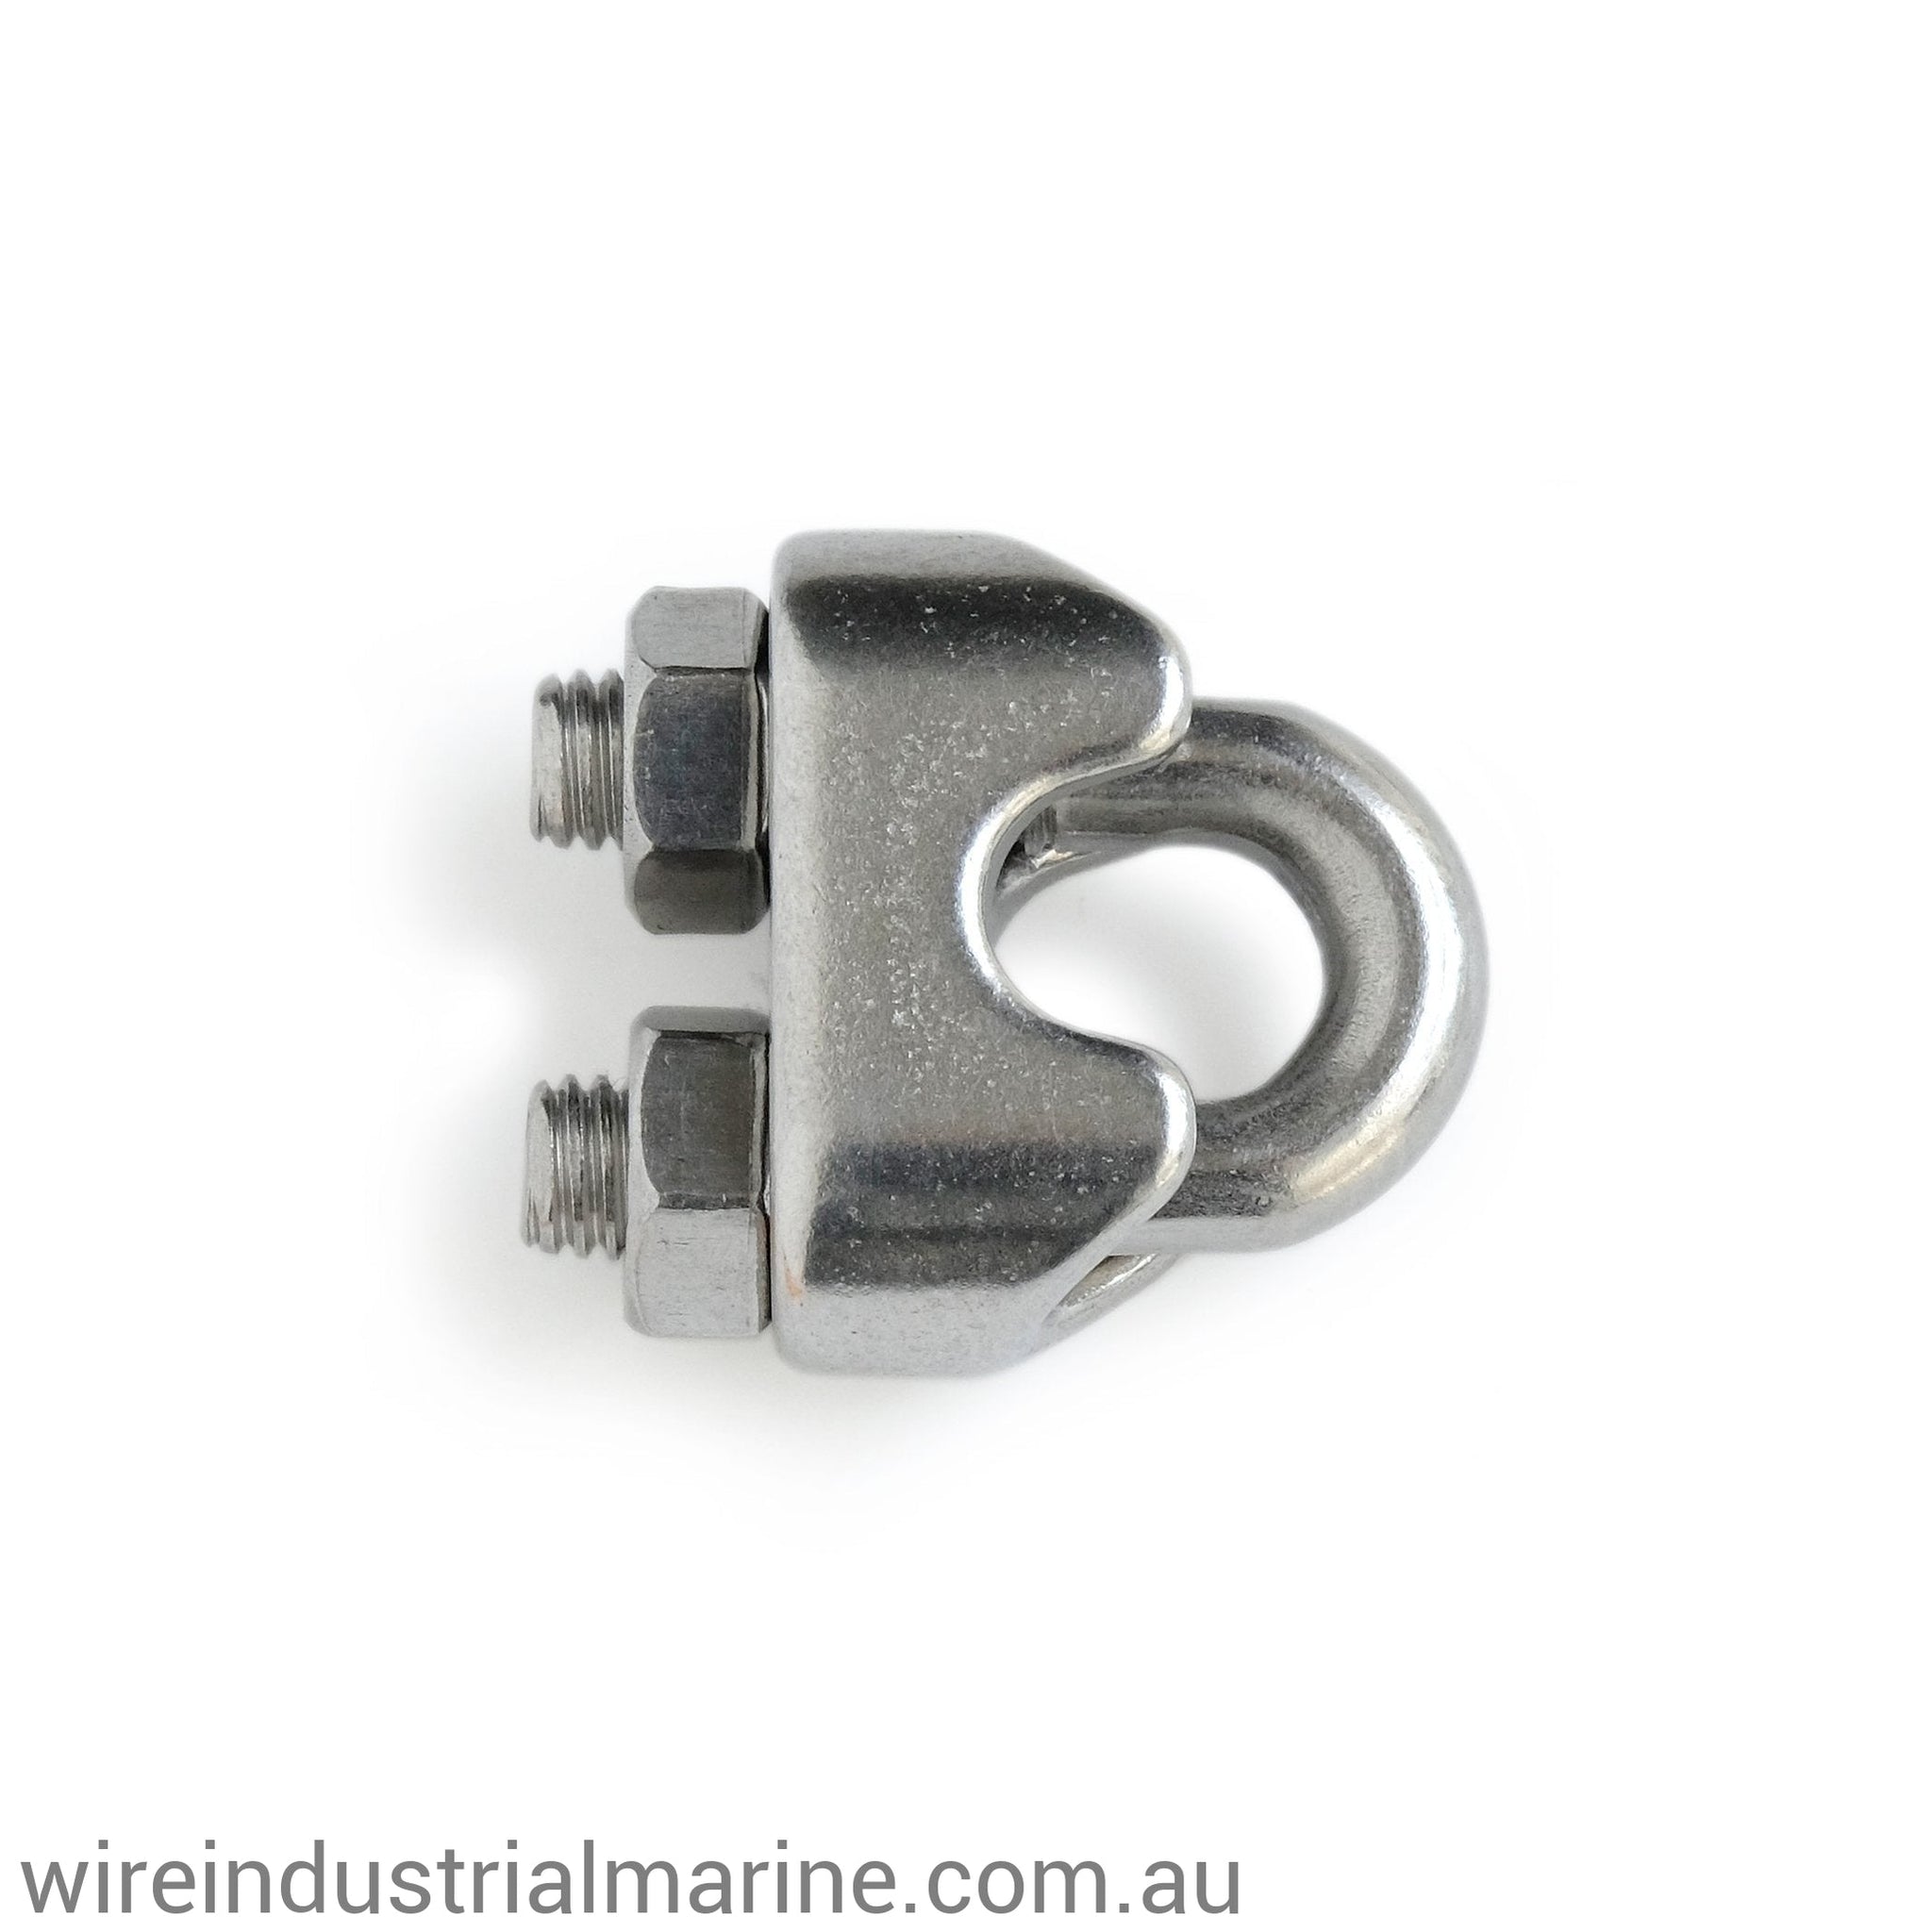 5mm Stainless steel wire grip-WGSS-5.0-Rigging and accessories-wireindustrialmarine